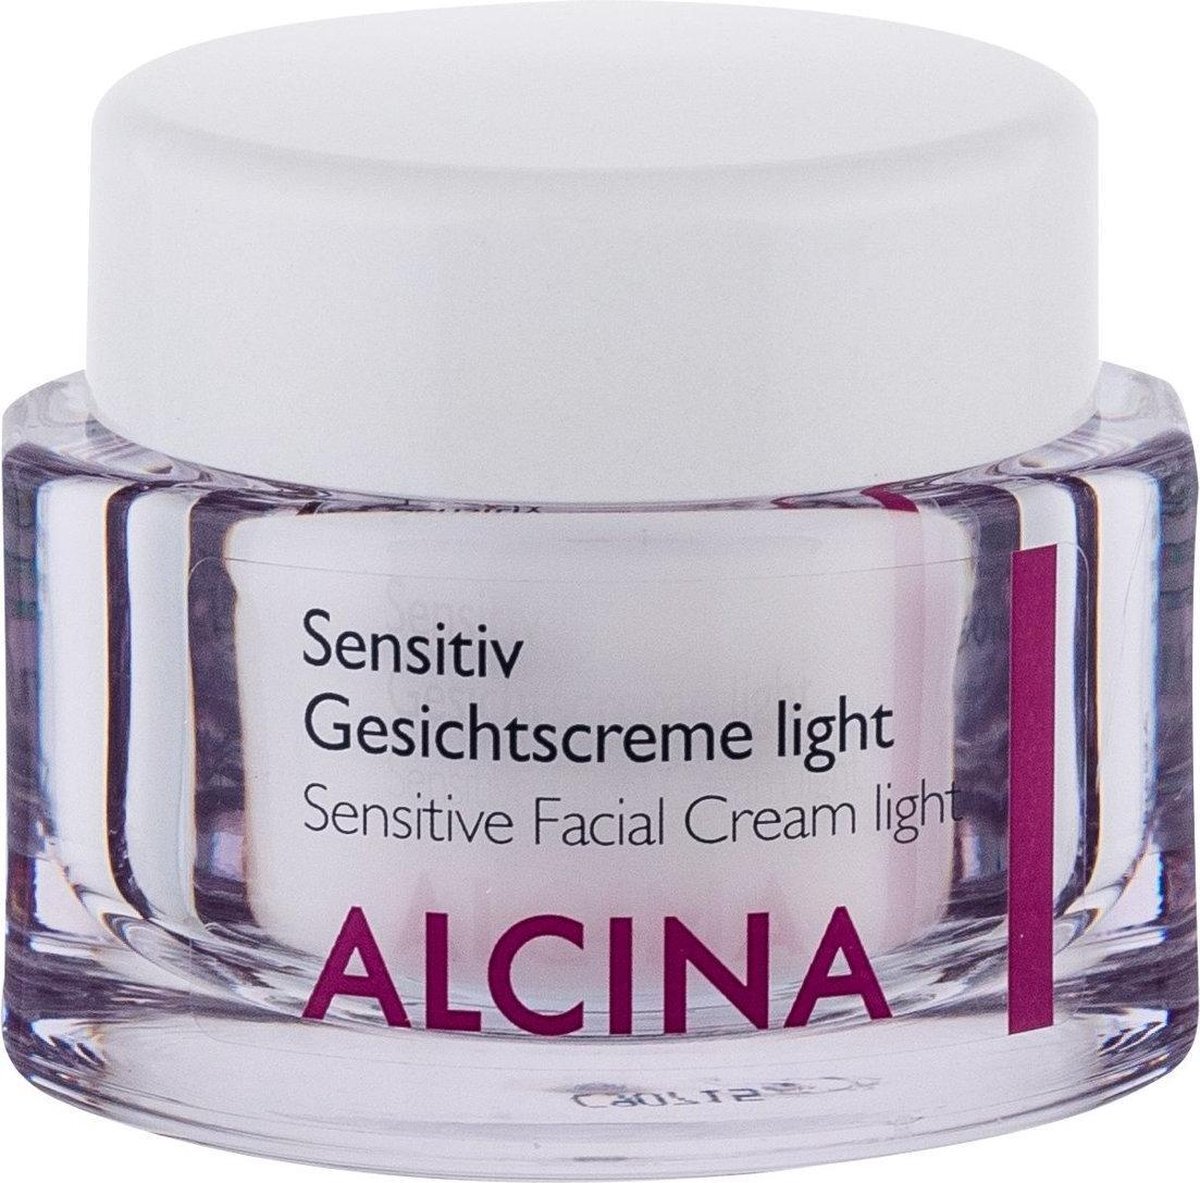 Alcina Sensitiv gezichtscrème light 250 ml